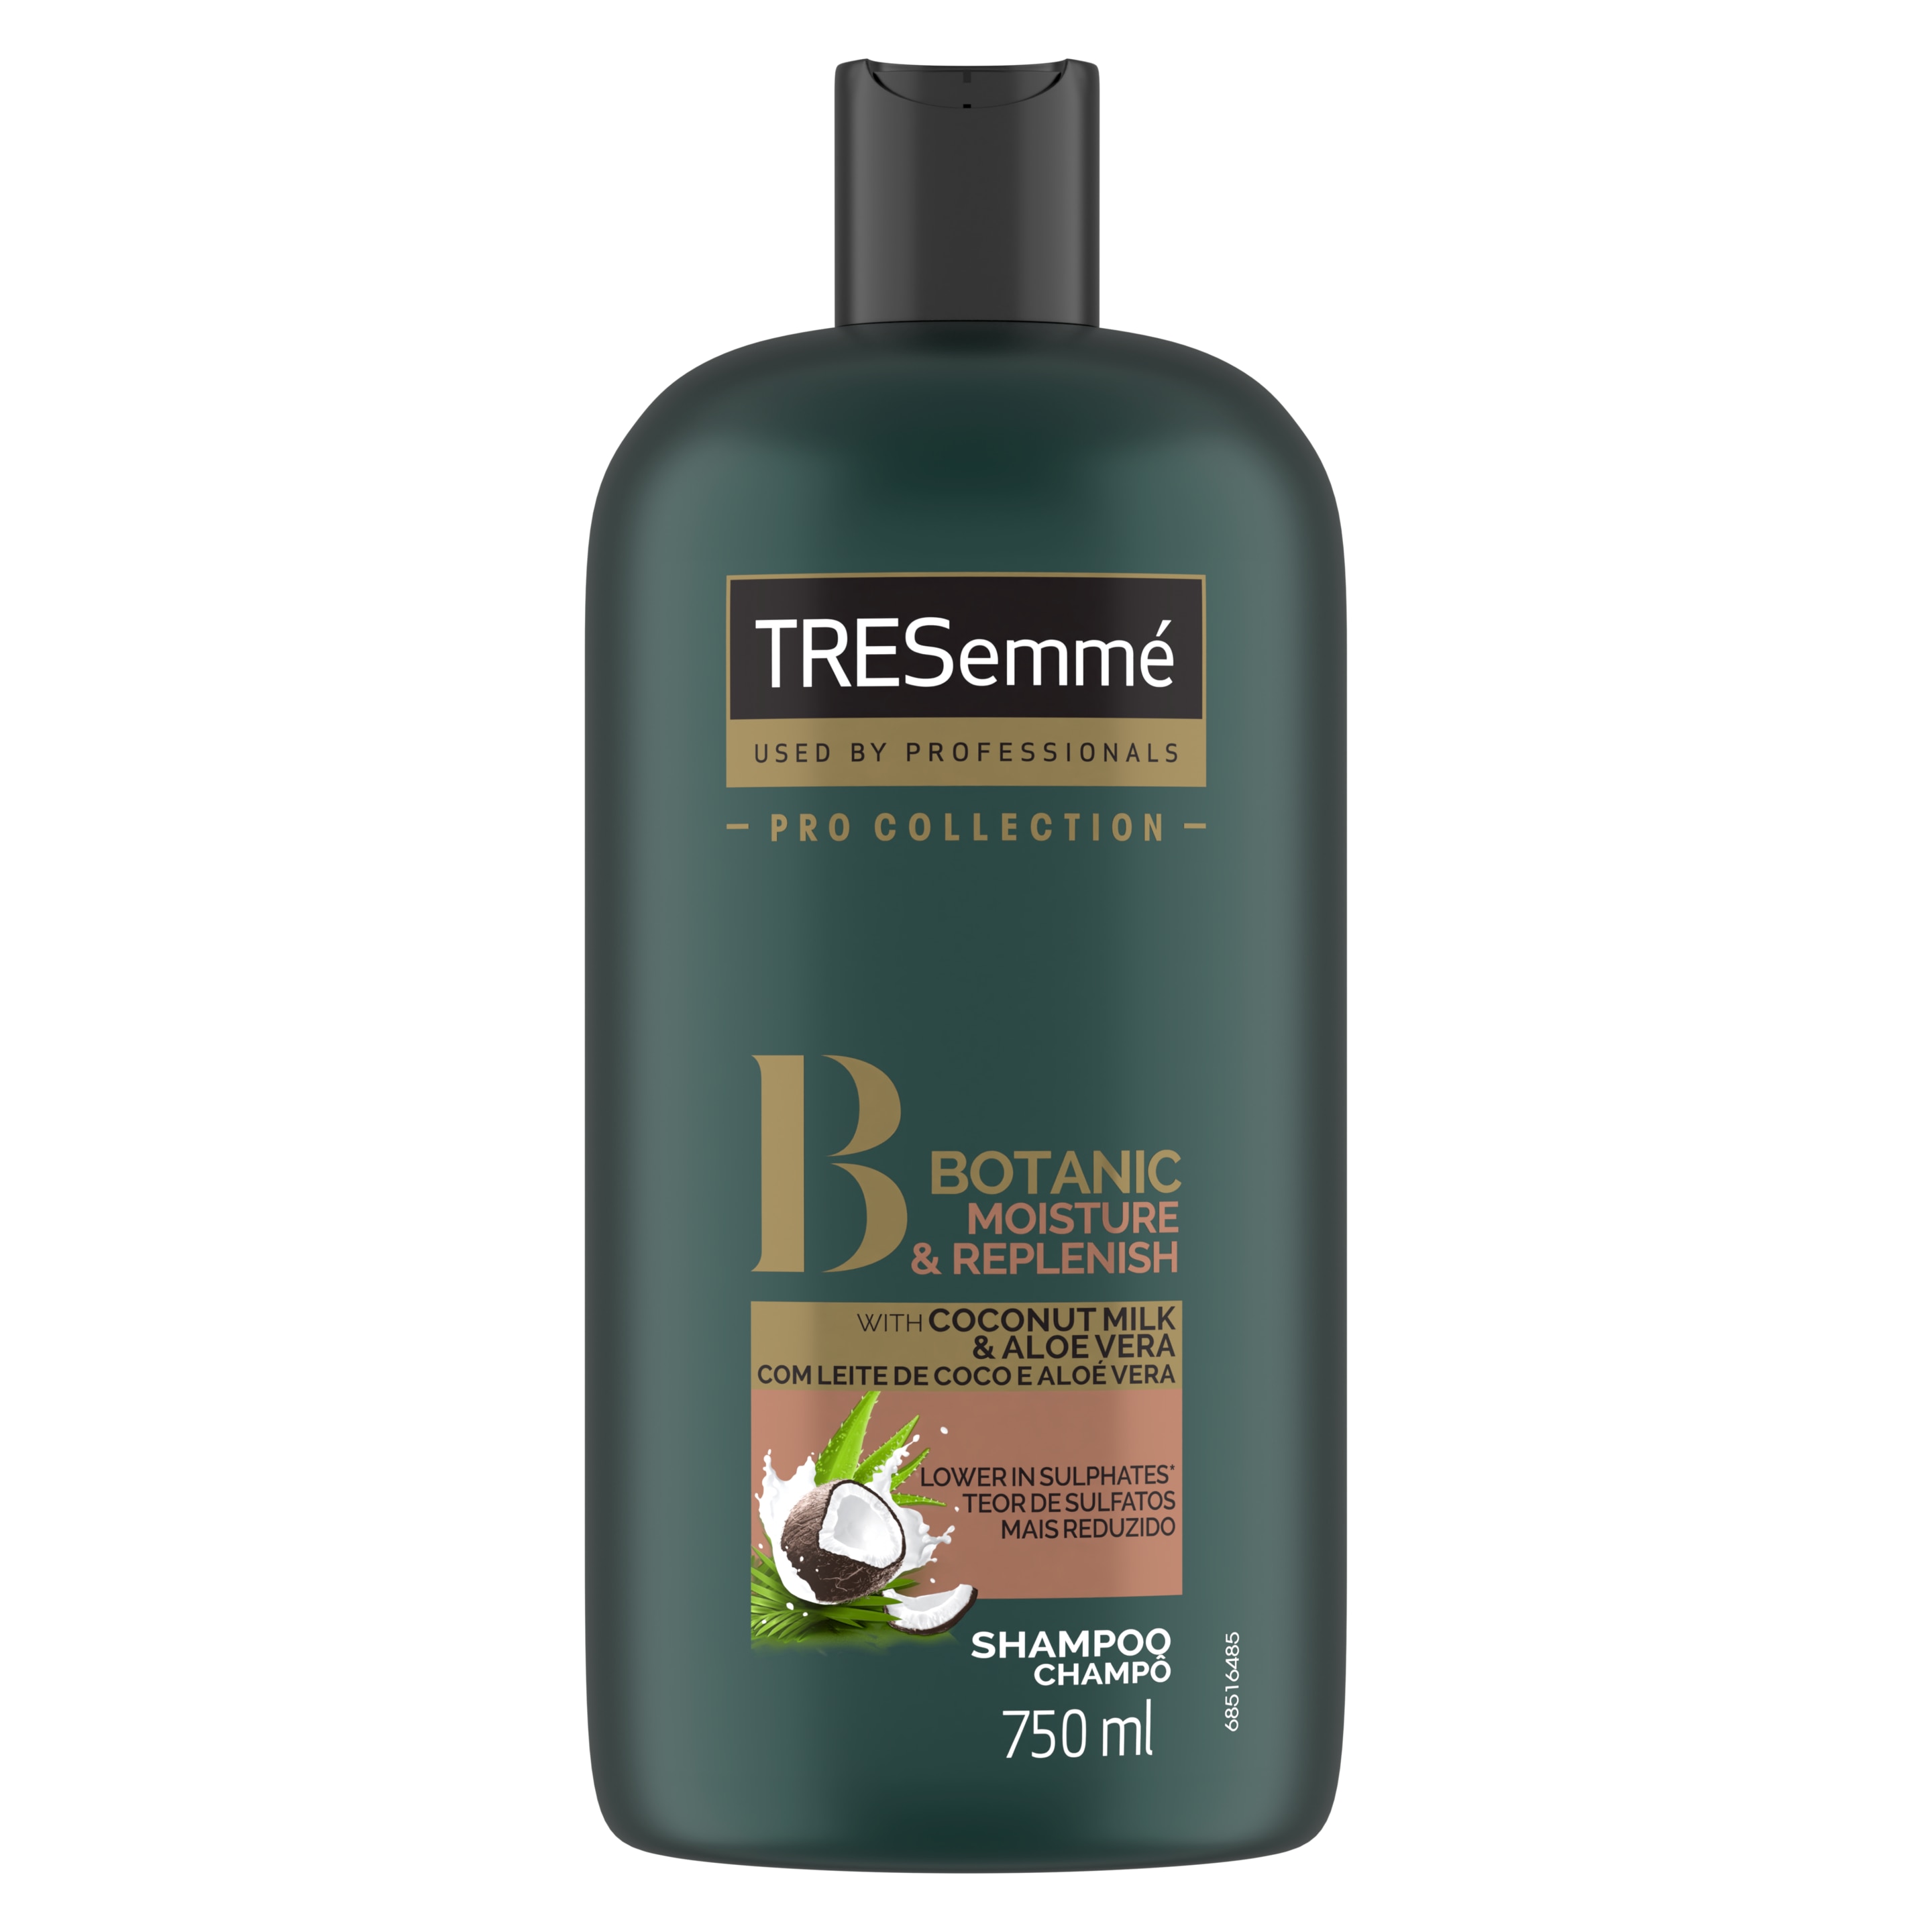 TRESemmé Botanic Moisture & Replenish Shampoo Front of Pack